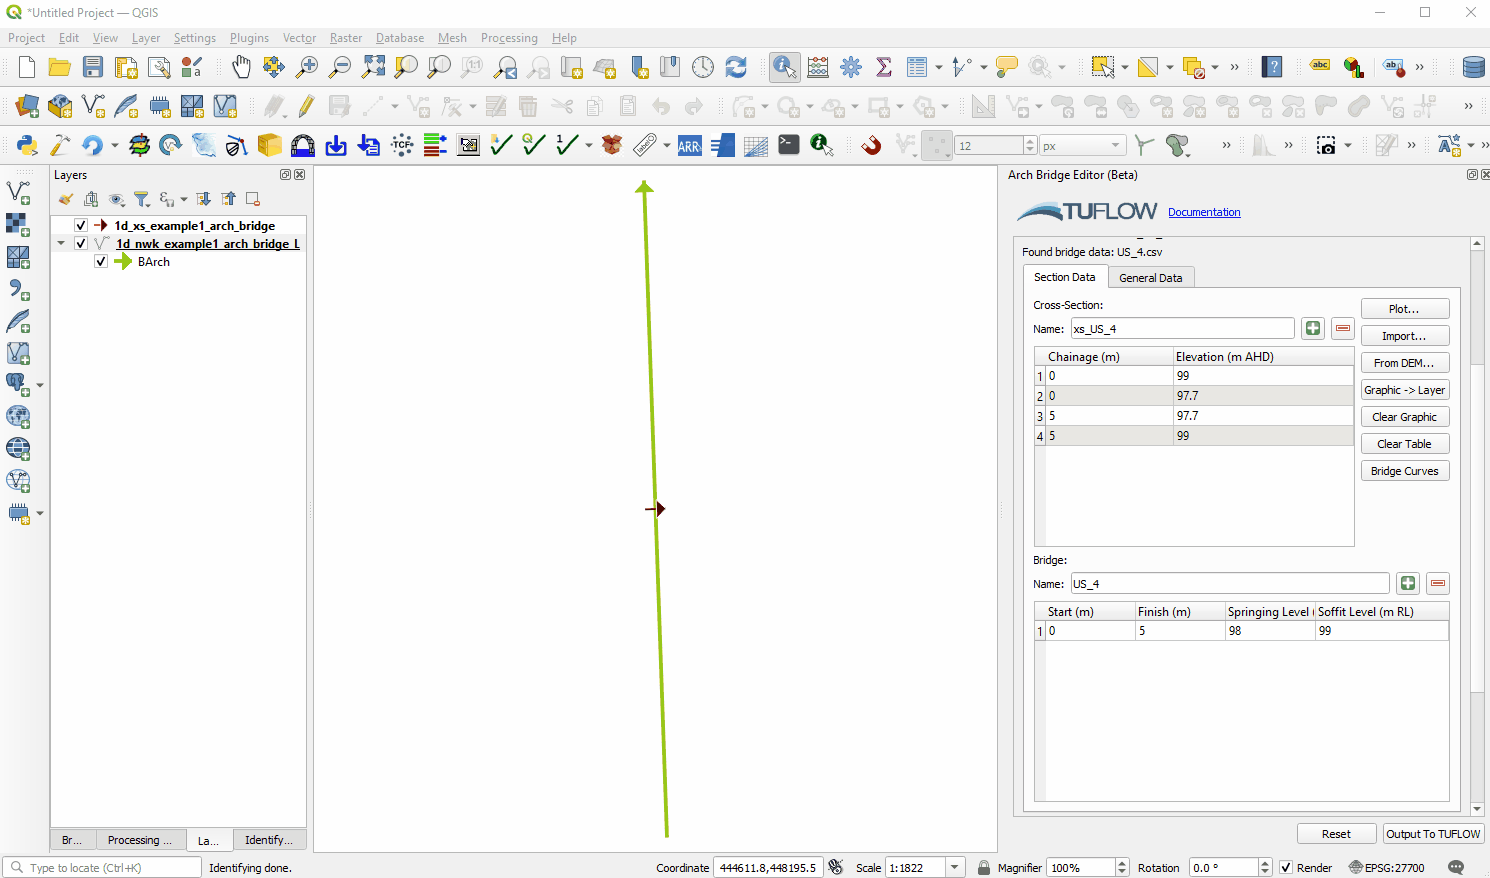 Arch bridge editor example2 edit run tool.gif